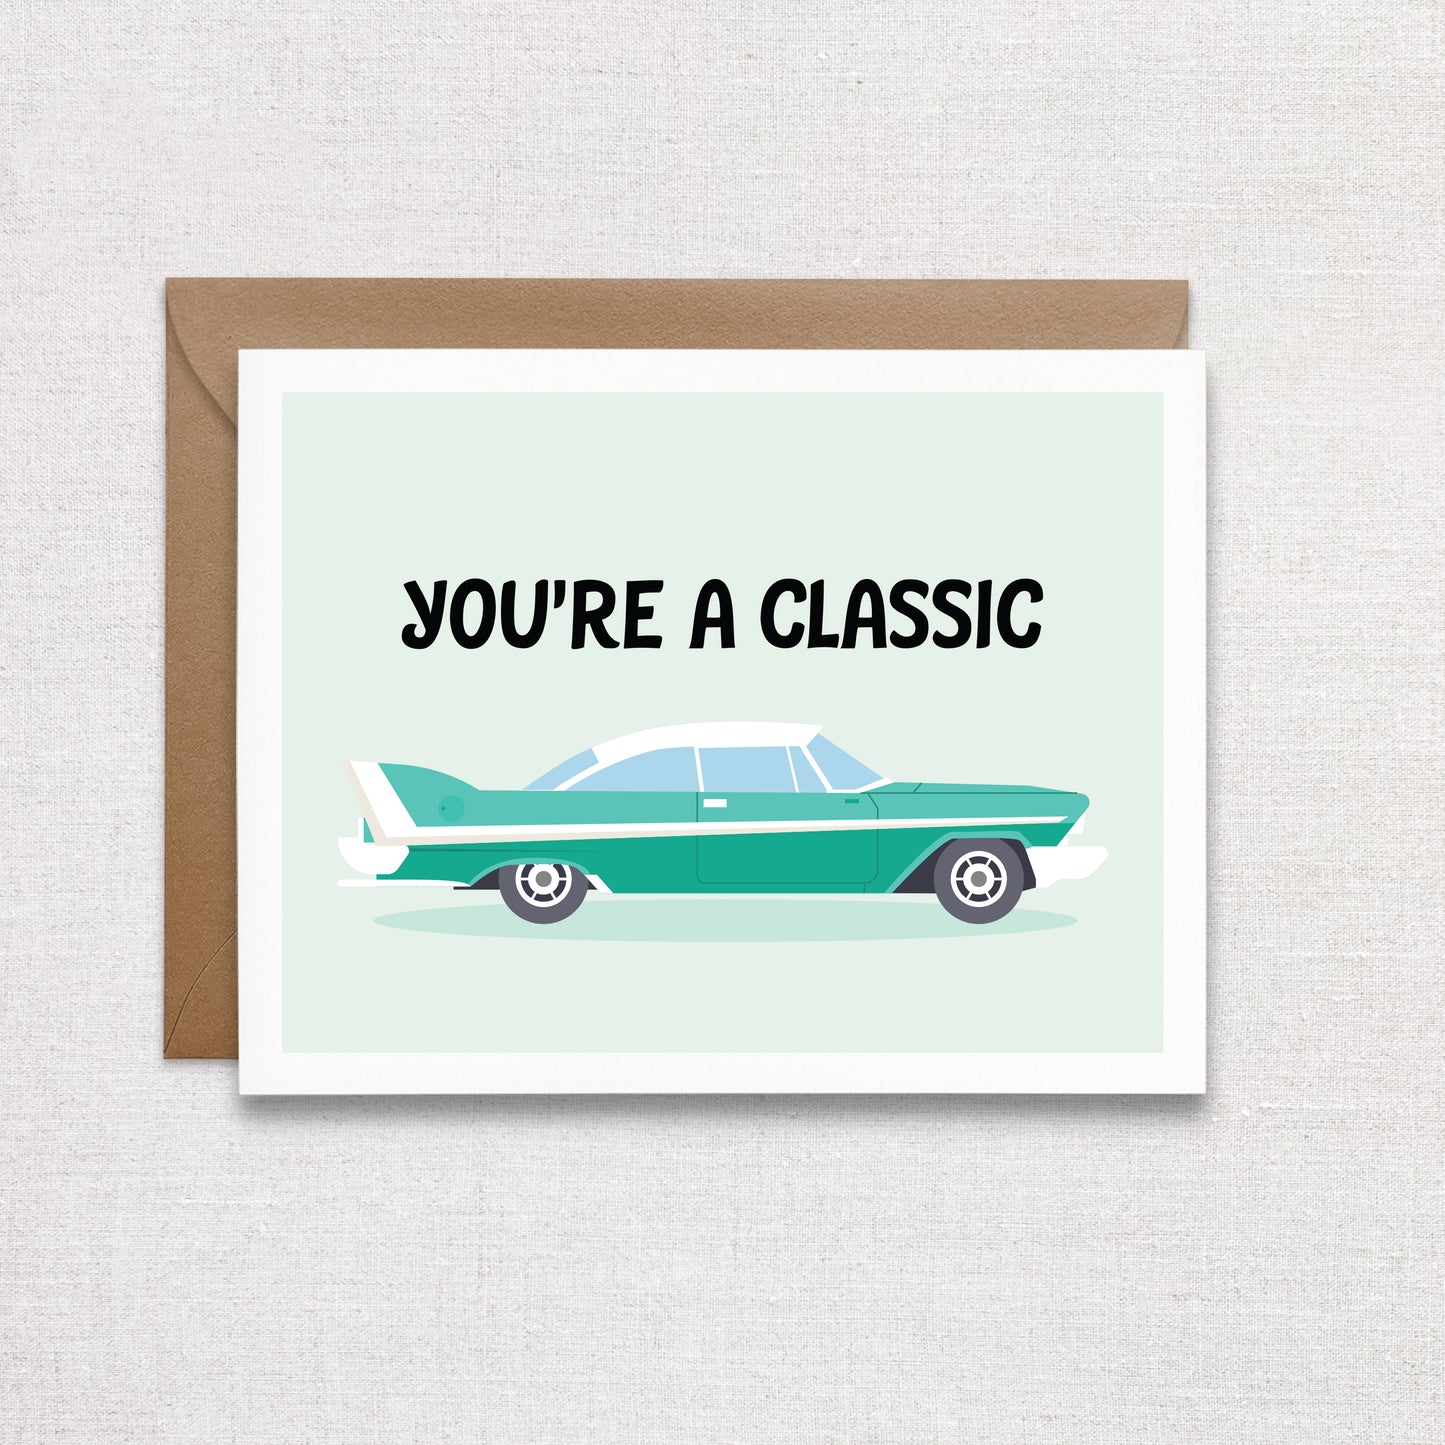 You're A Classic - Classic Car Greeting Card